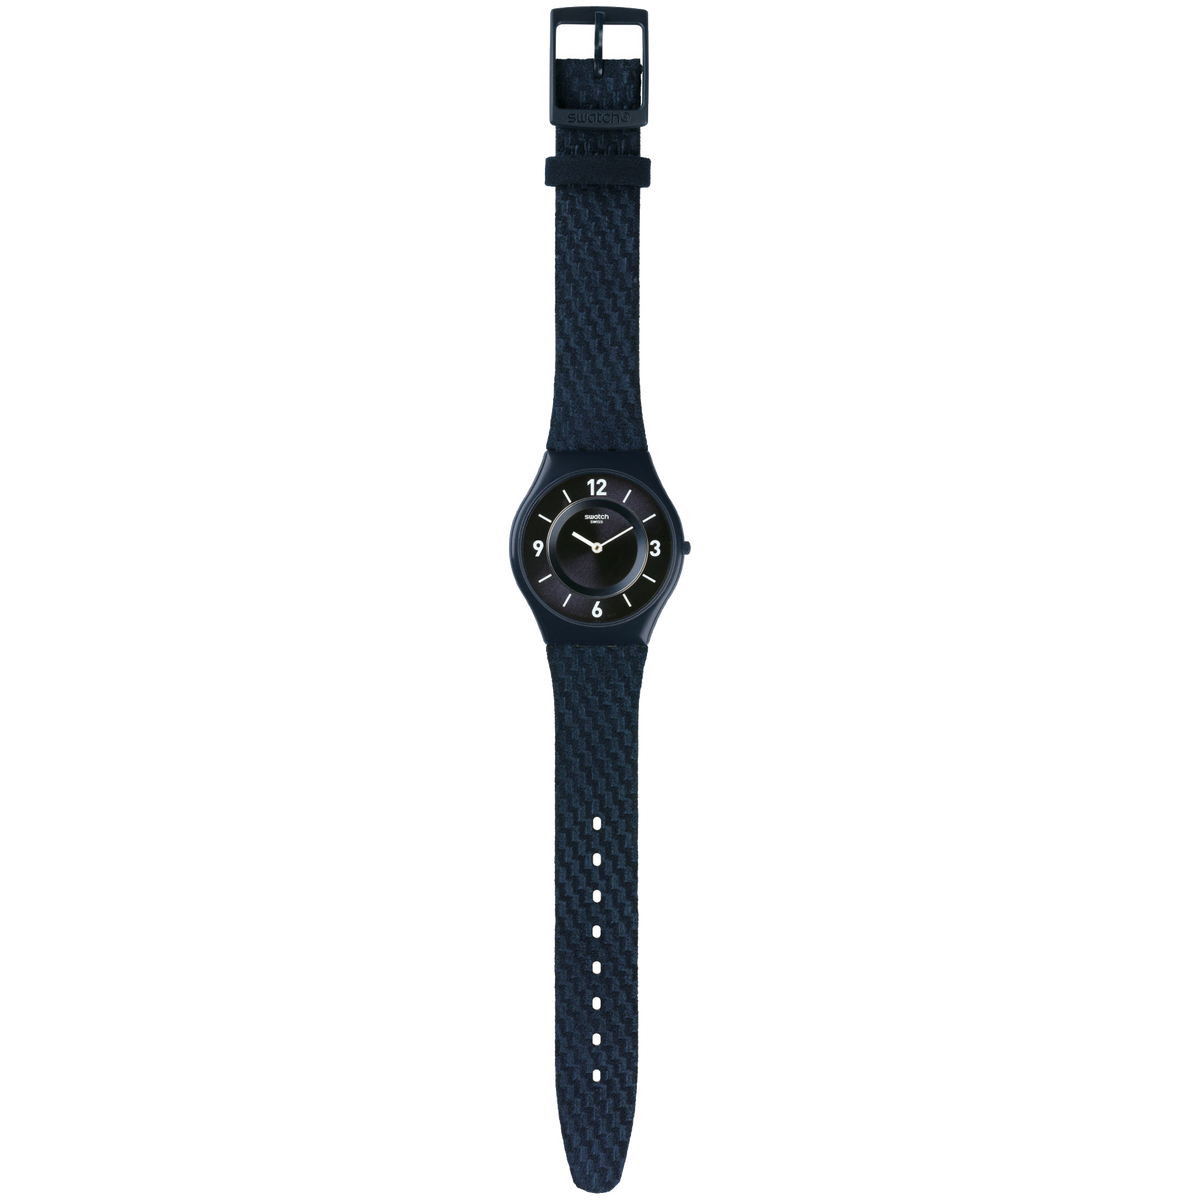 Swatch Skin Watch - Blaumann